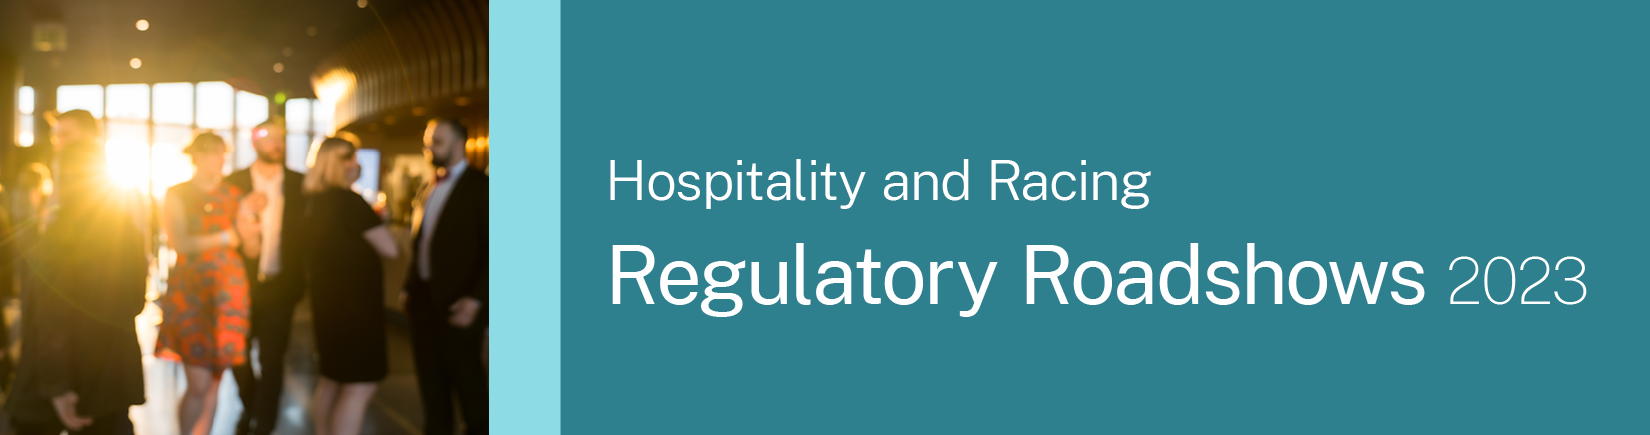 Hospitality and Racing - Regulatory Roadshows